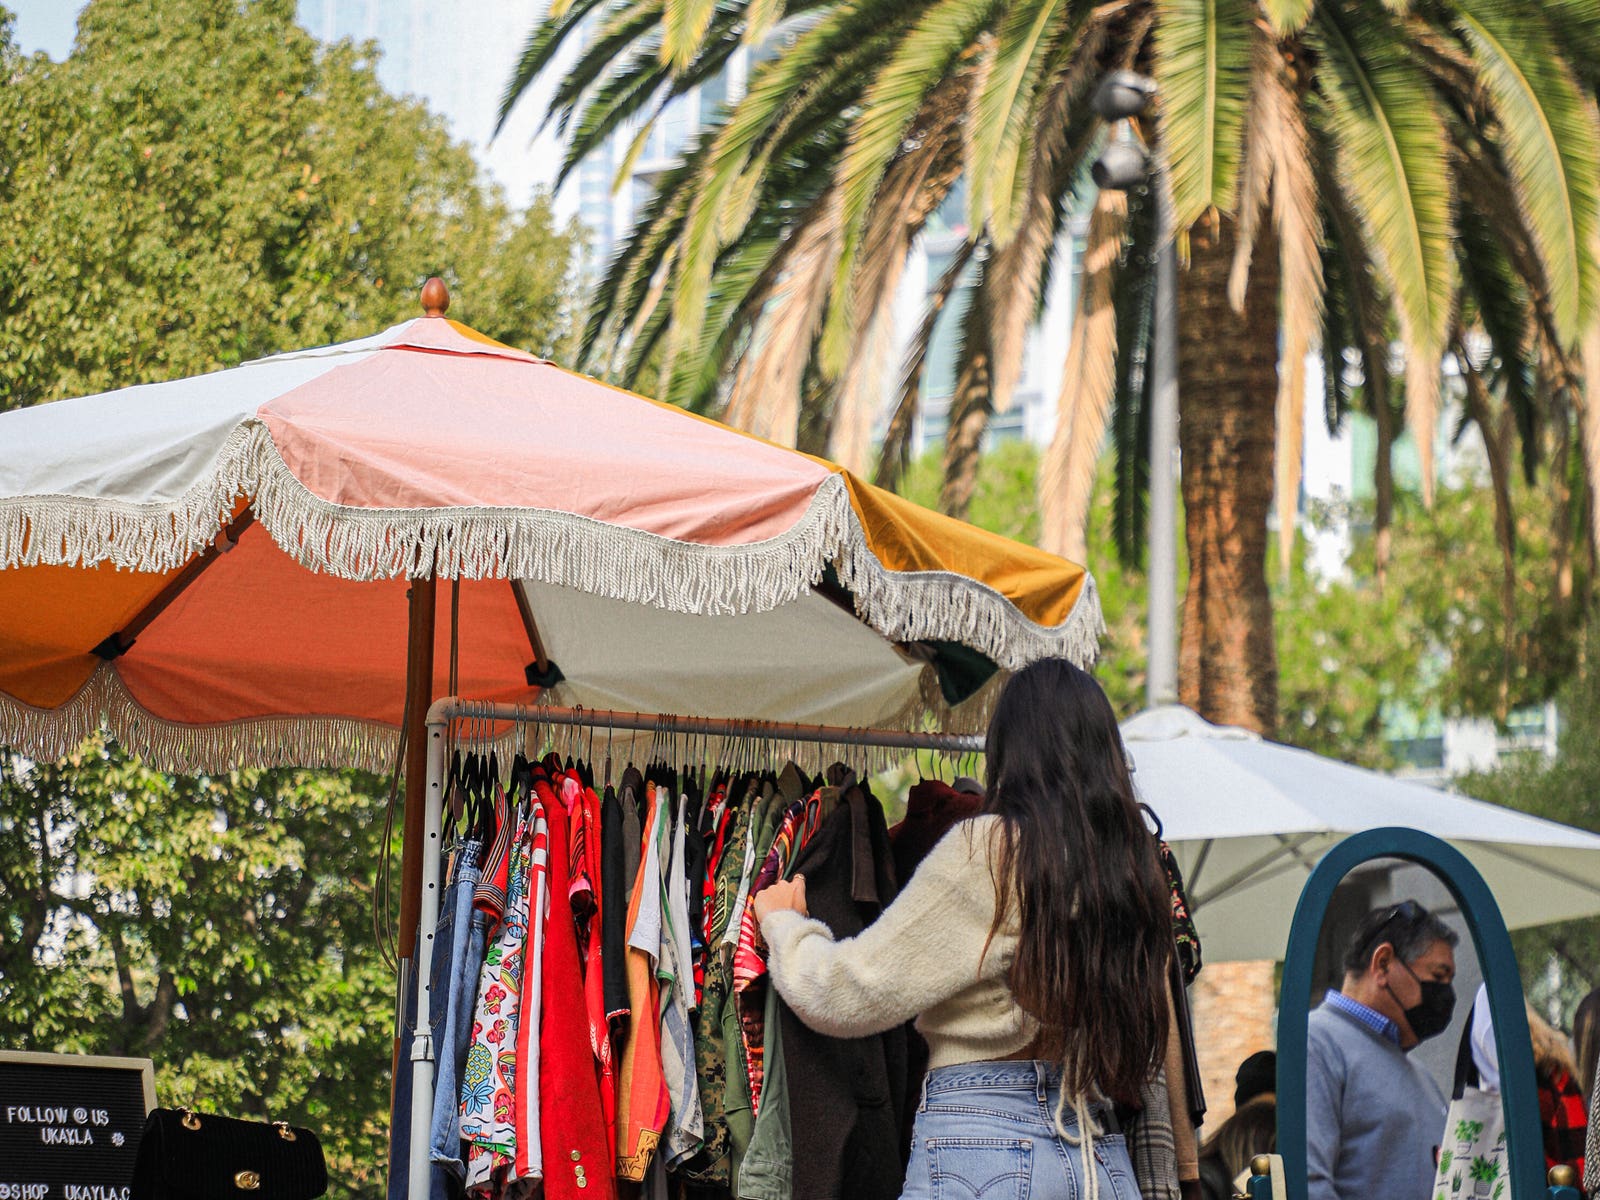 Shoppers examine clothing racks at the FIDM Holiday Market